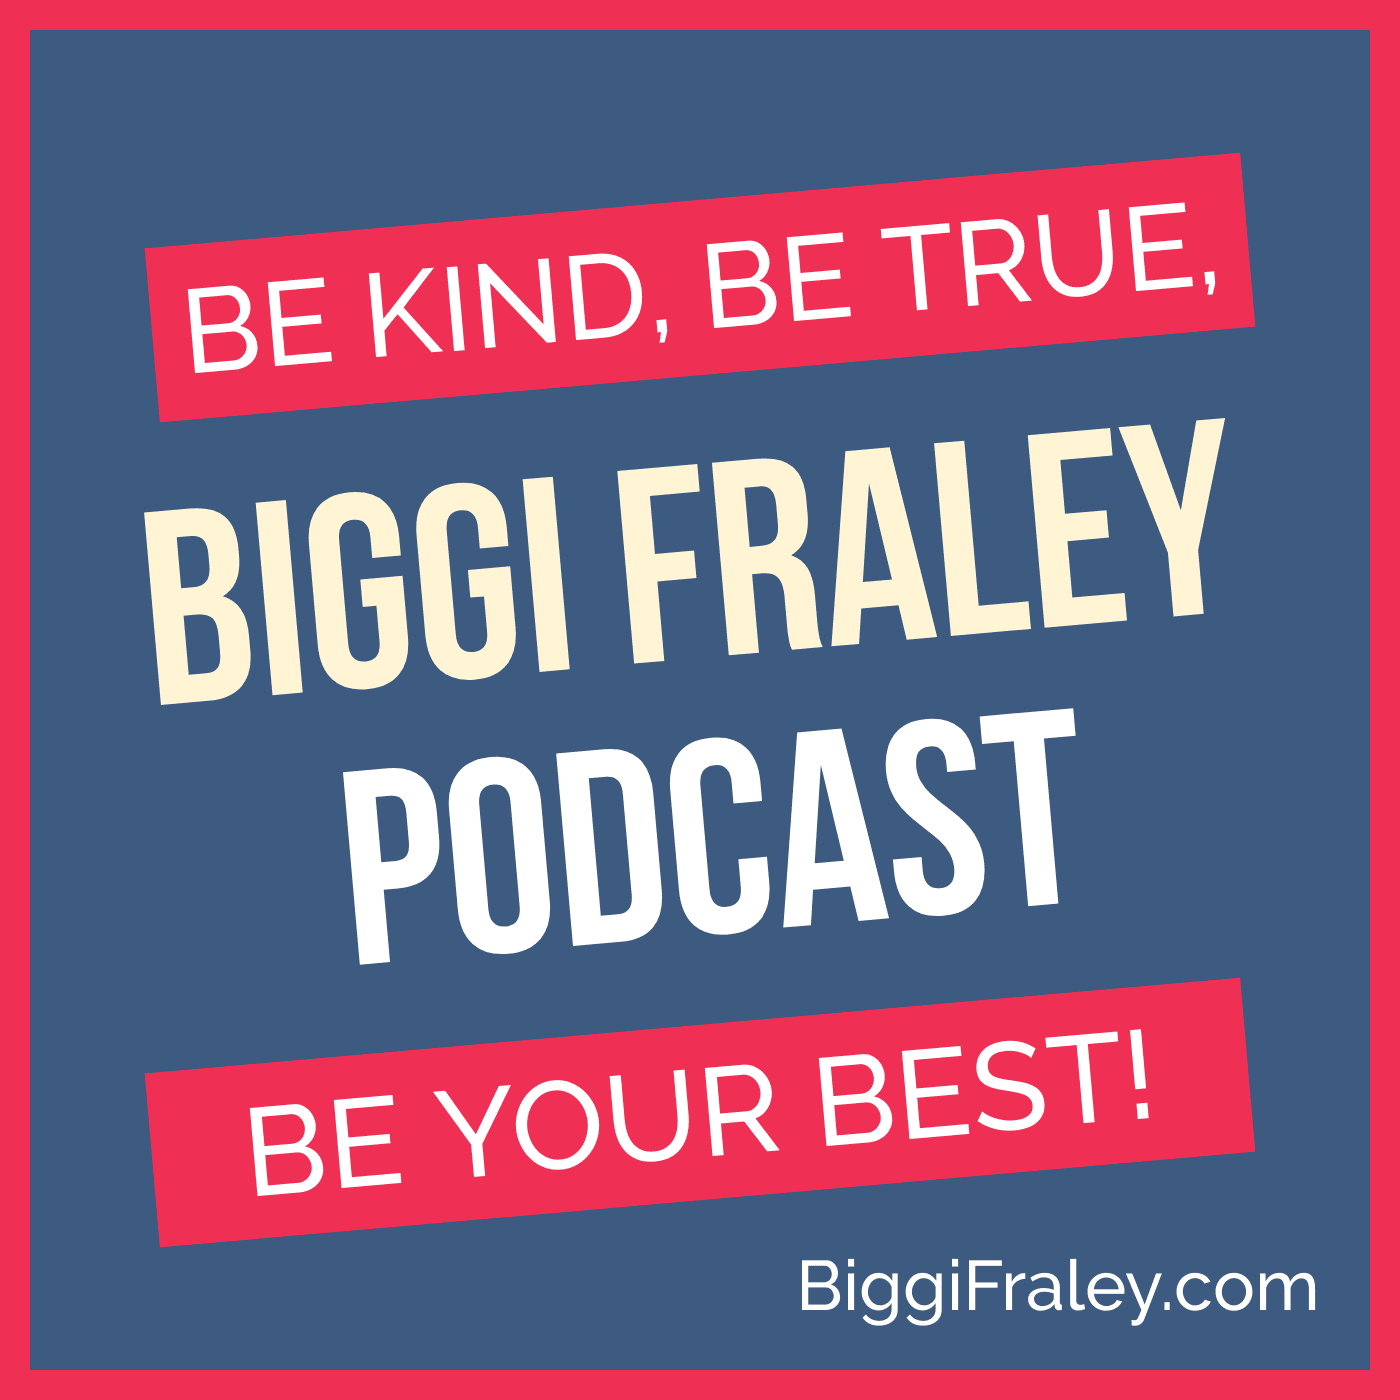 The Biggi Fraley Podcast